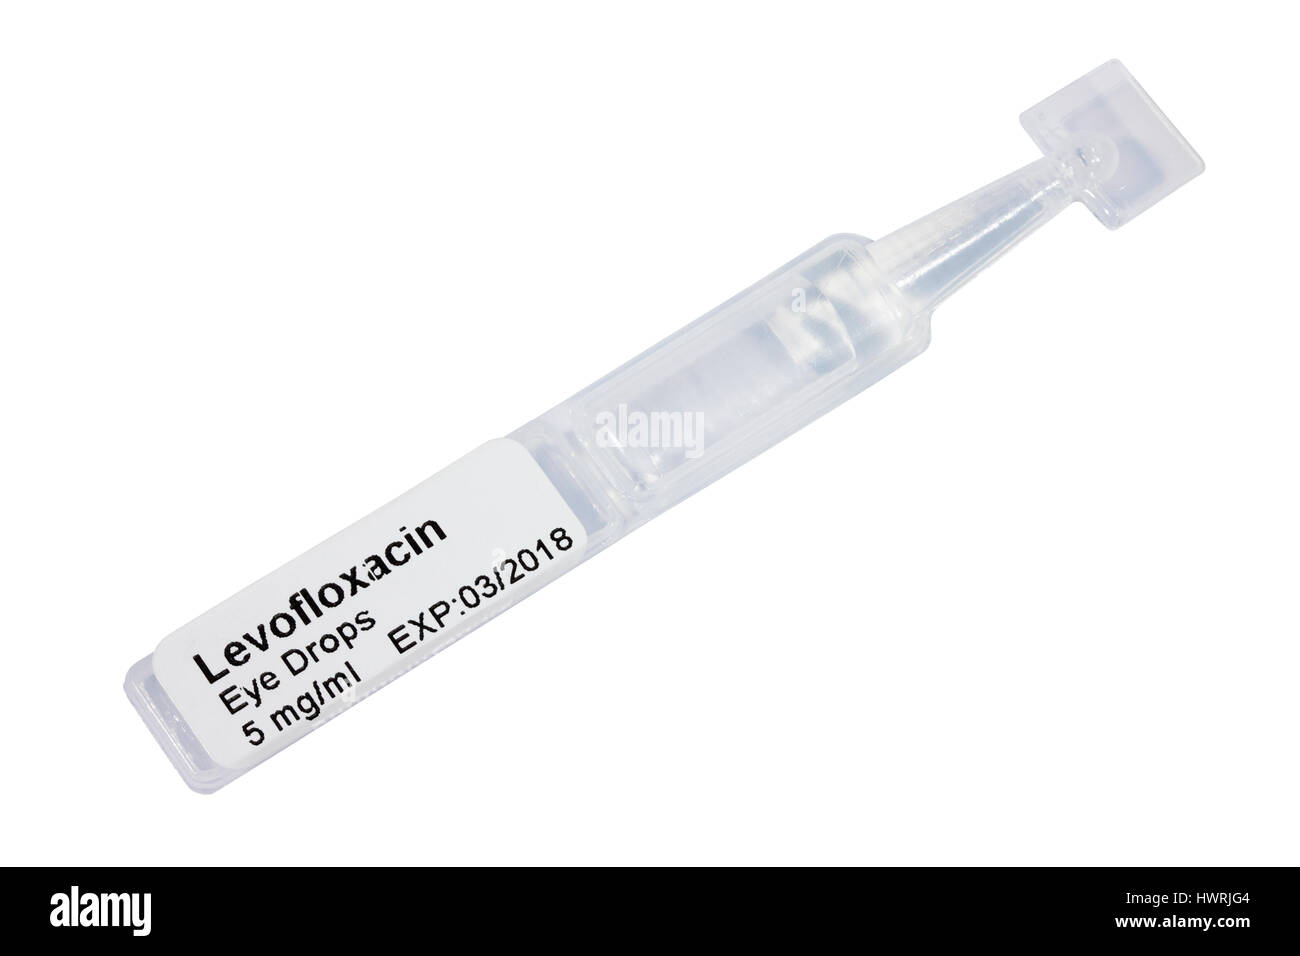 Oftaquix 5mg/ml Levofloxacin single dose eye drop solution 0.3 ml ampoule / ampule / capsule / pipette / dropper isolated on a white background Stock Photo